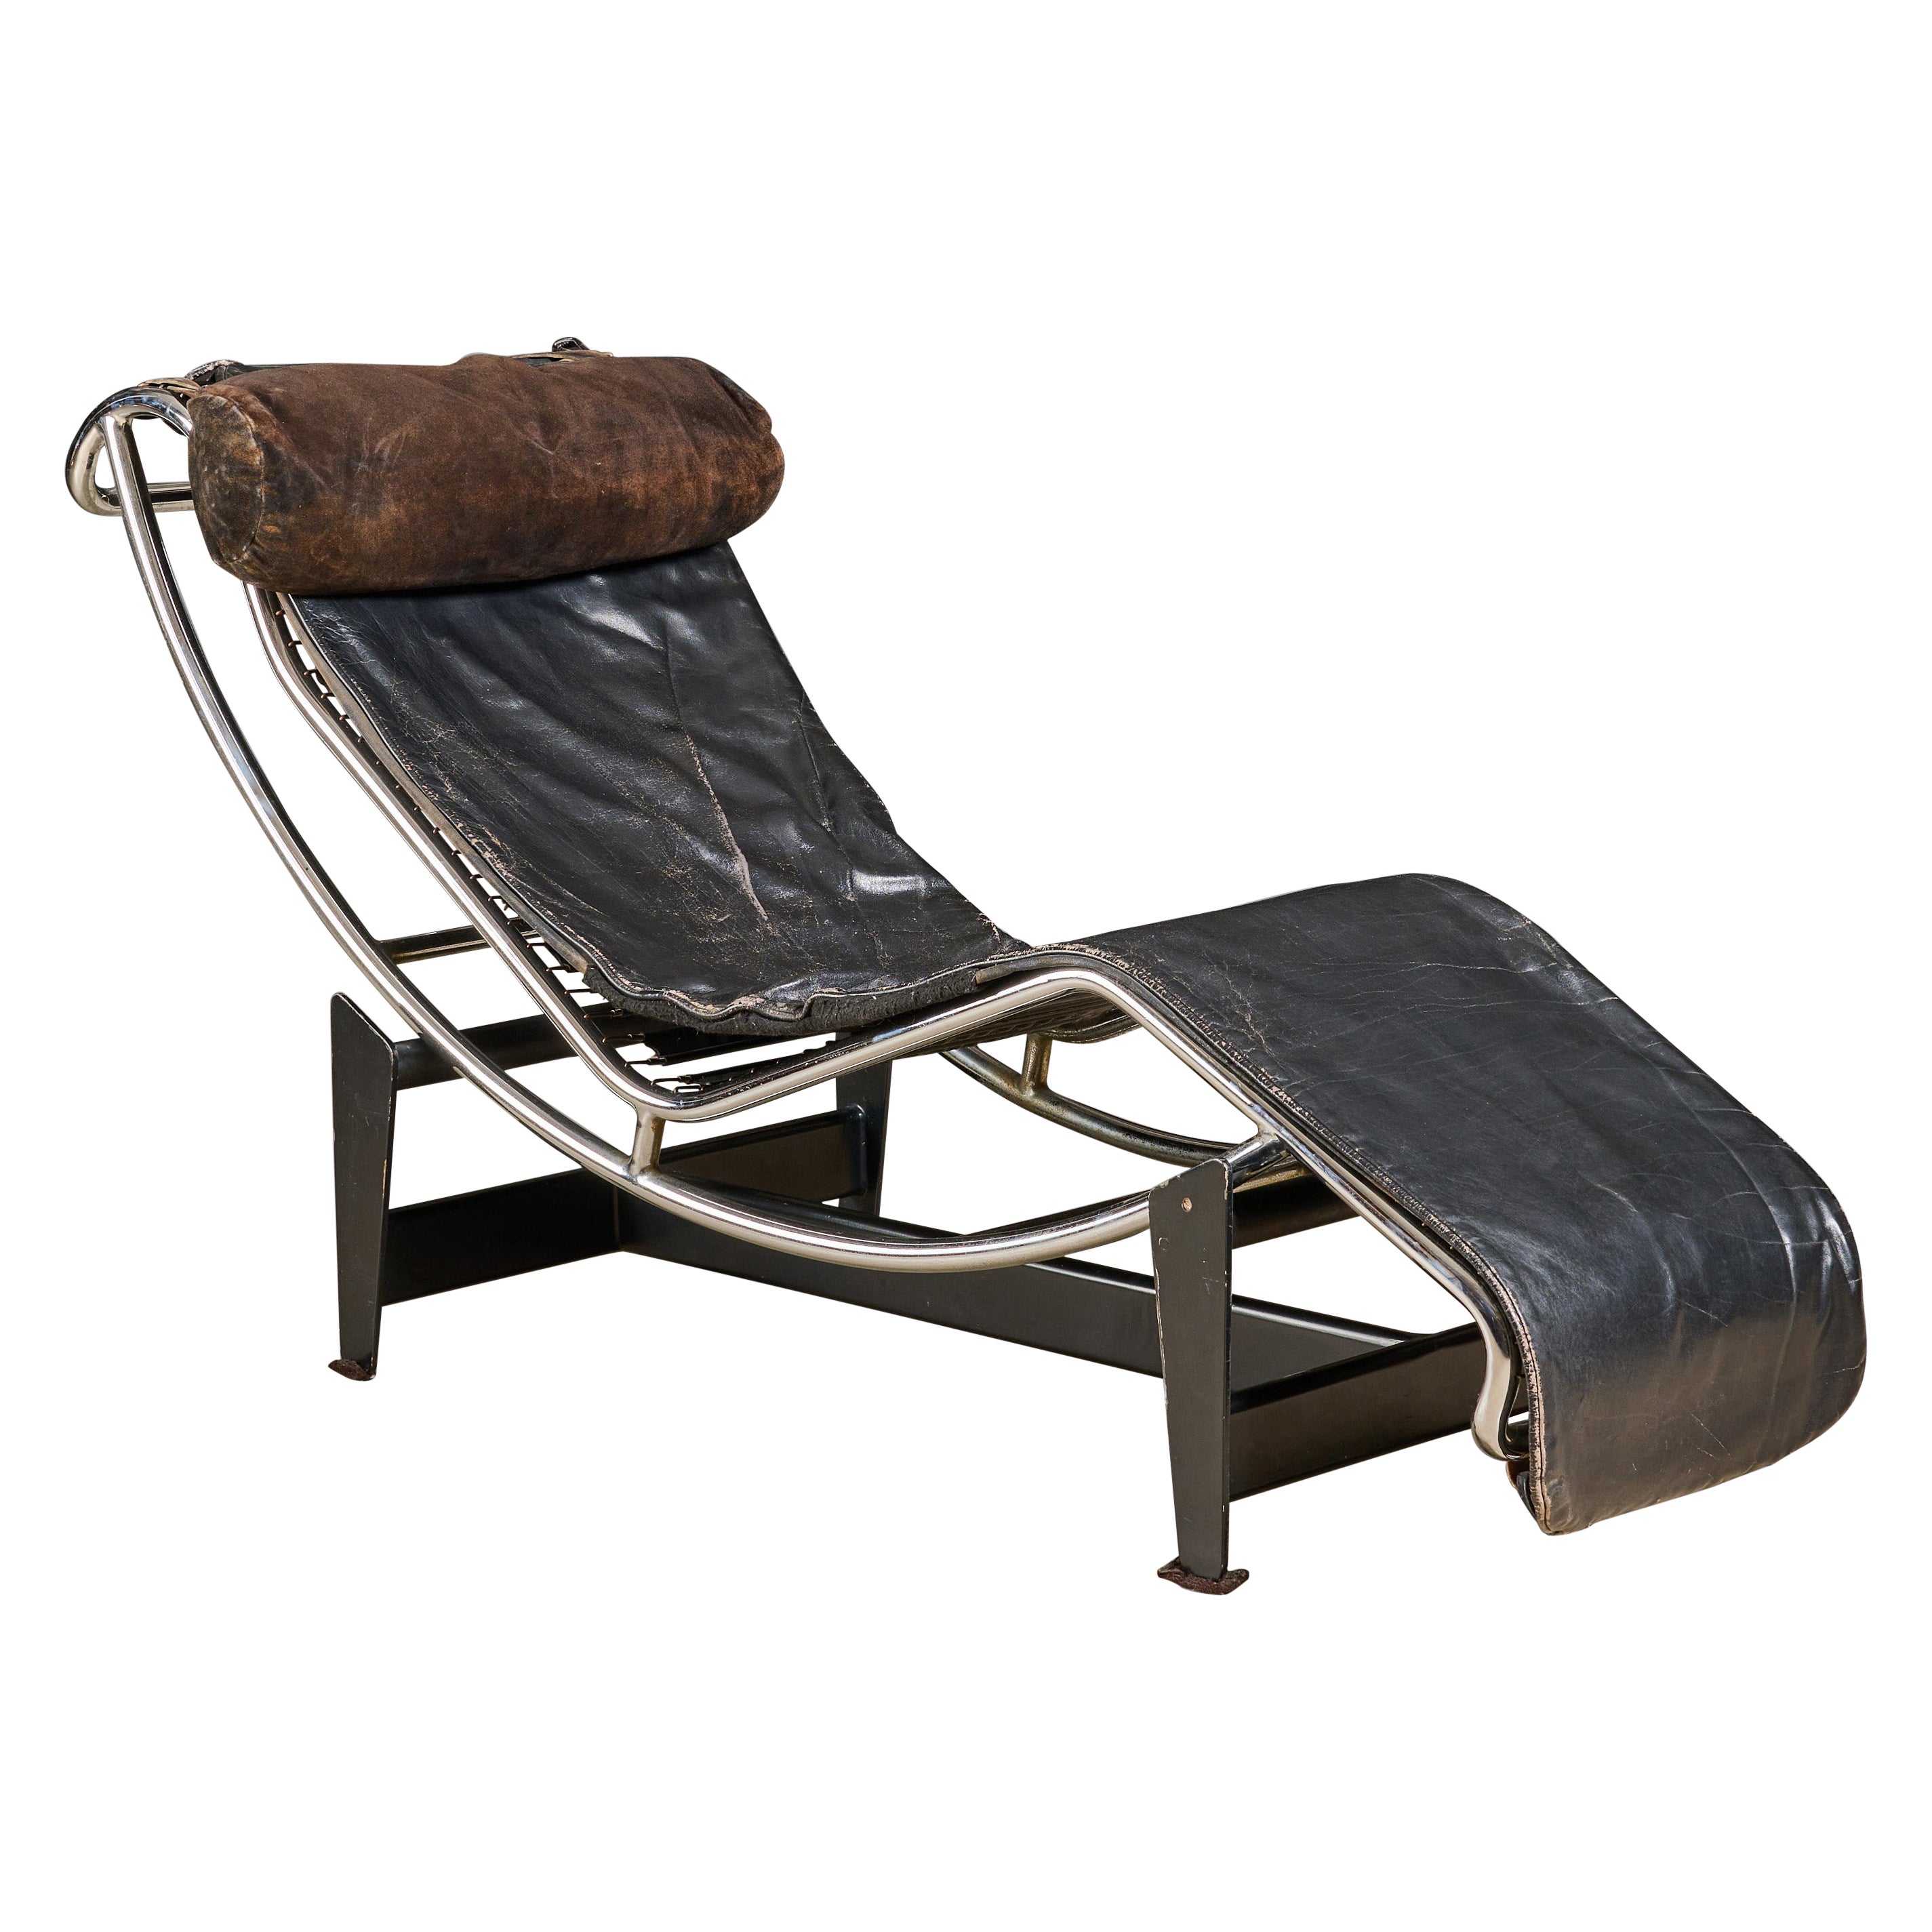 Le Corbusier Chrome & Leather Lounge Chair